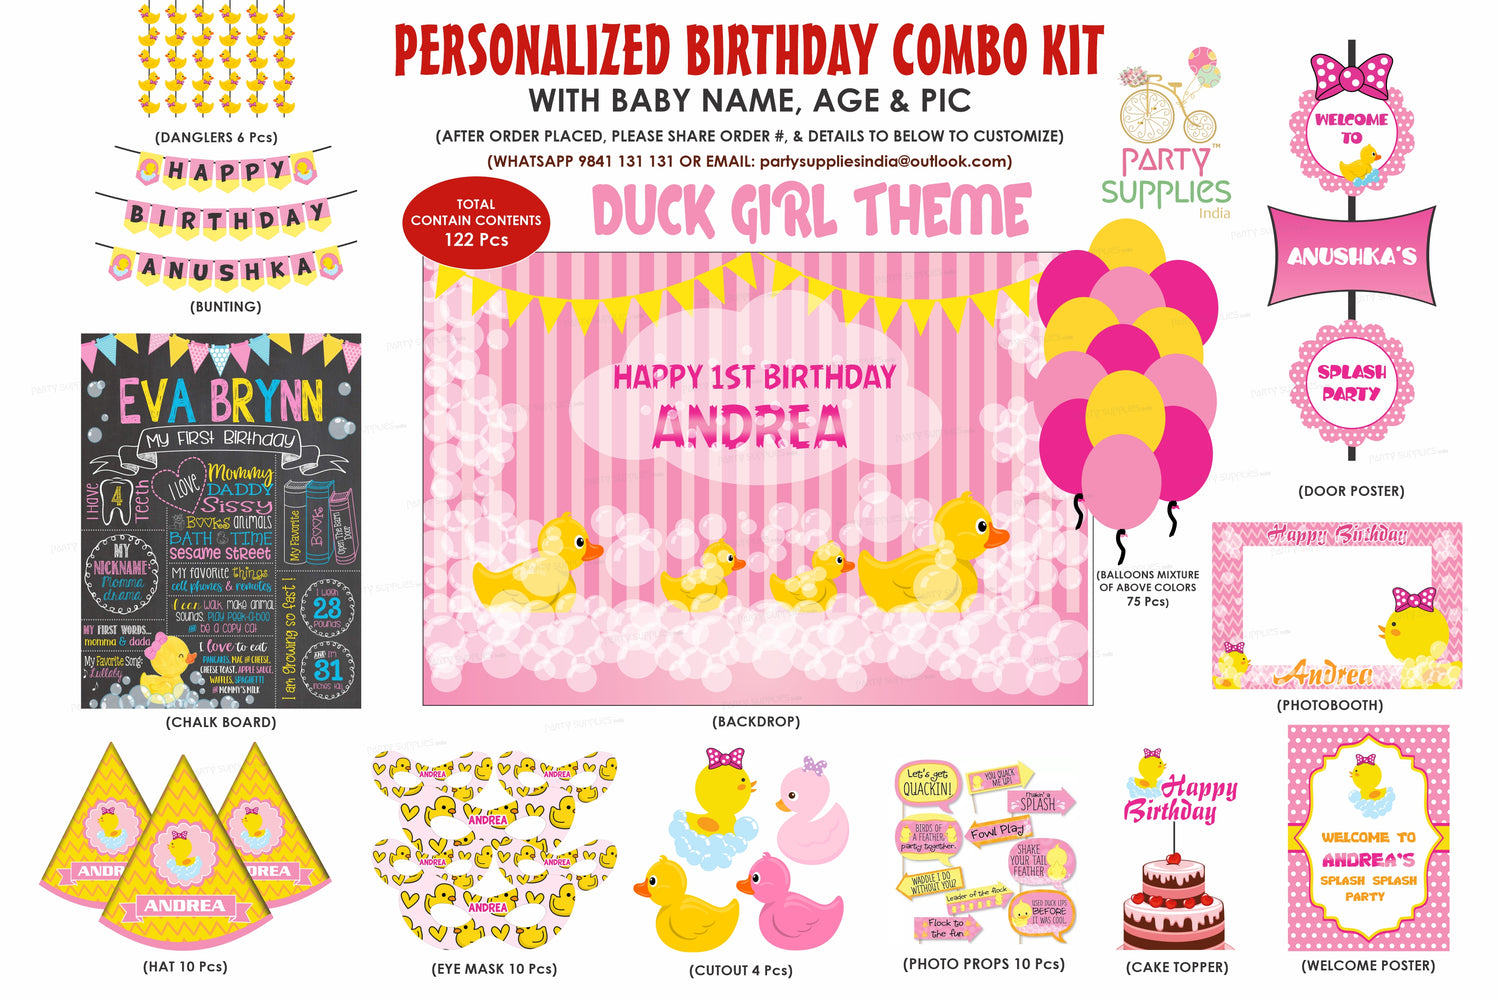 PSI Duck Girl Theme Classic Kit